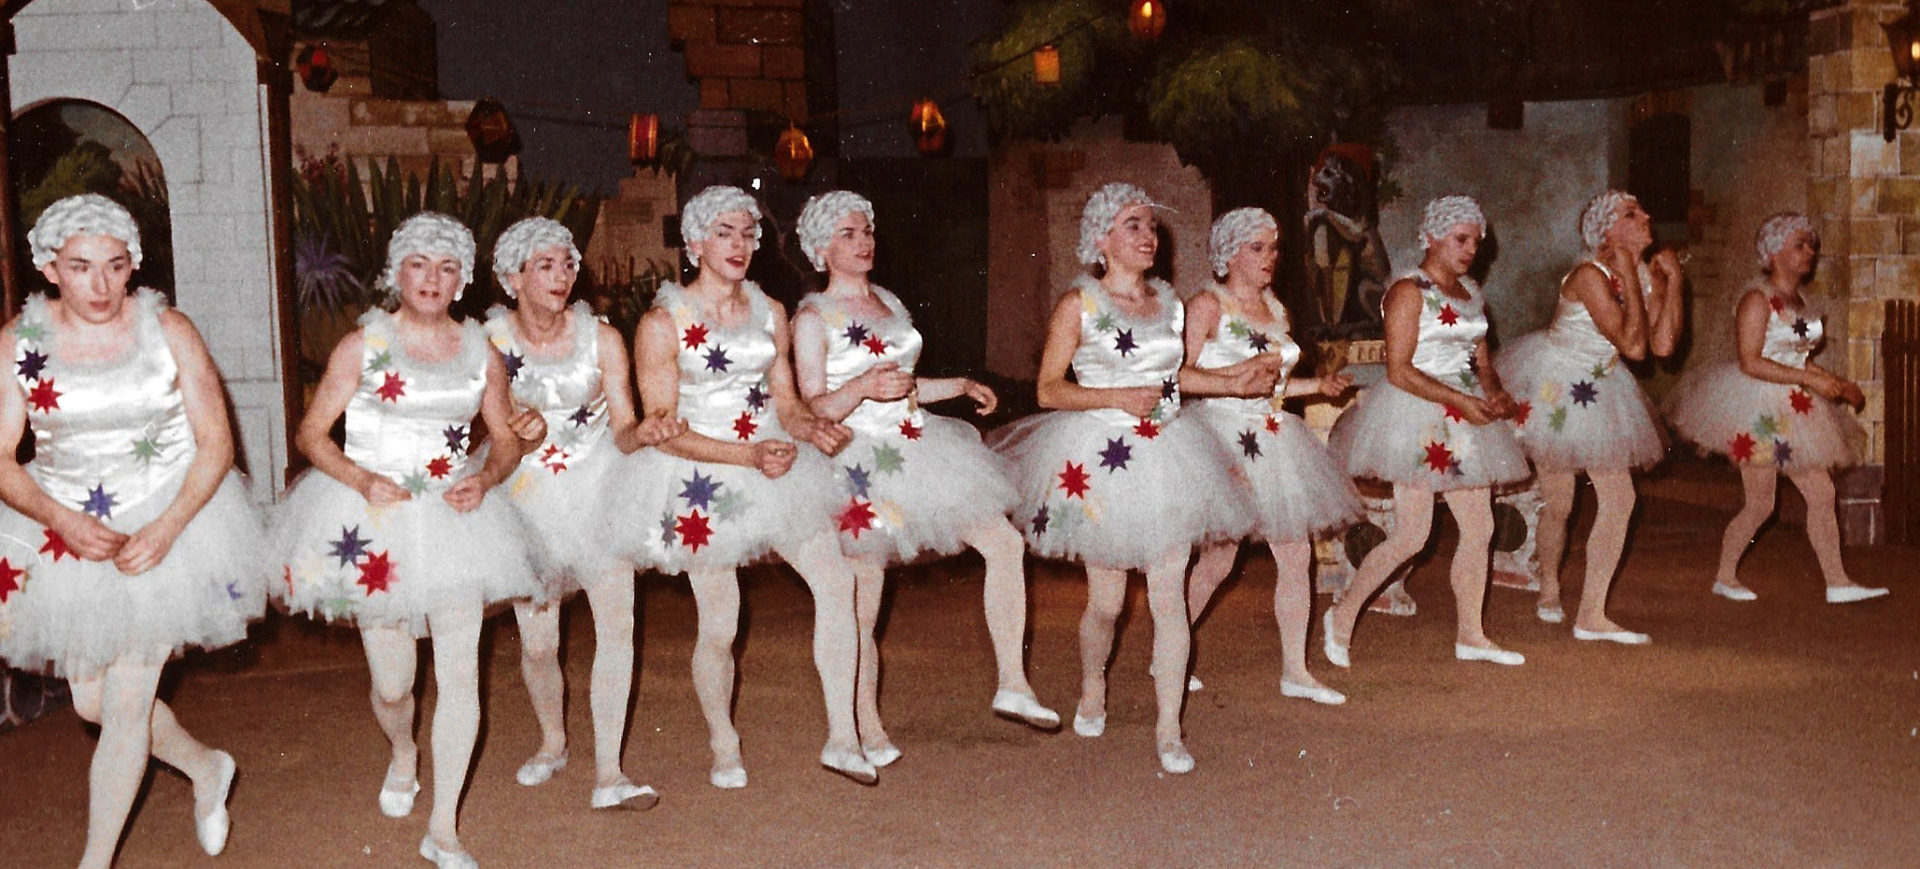 Ne Kölsche Opstand - Divertissementchen 1968 - Ballett beim Tanzen